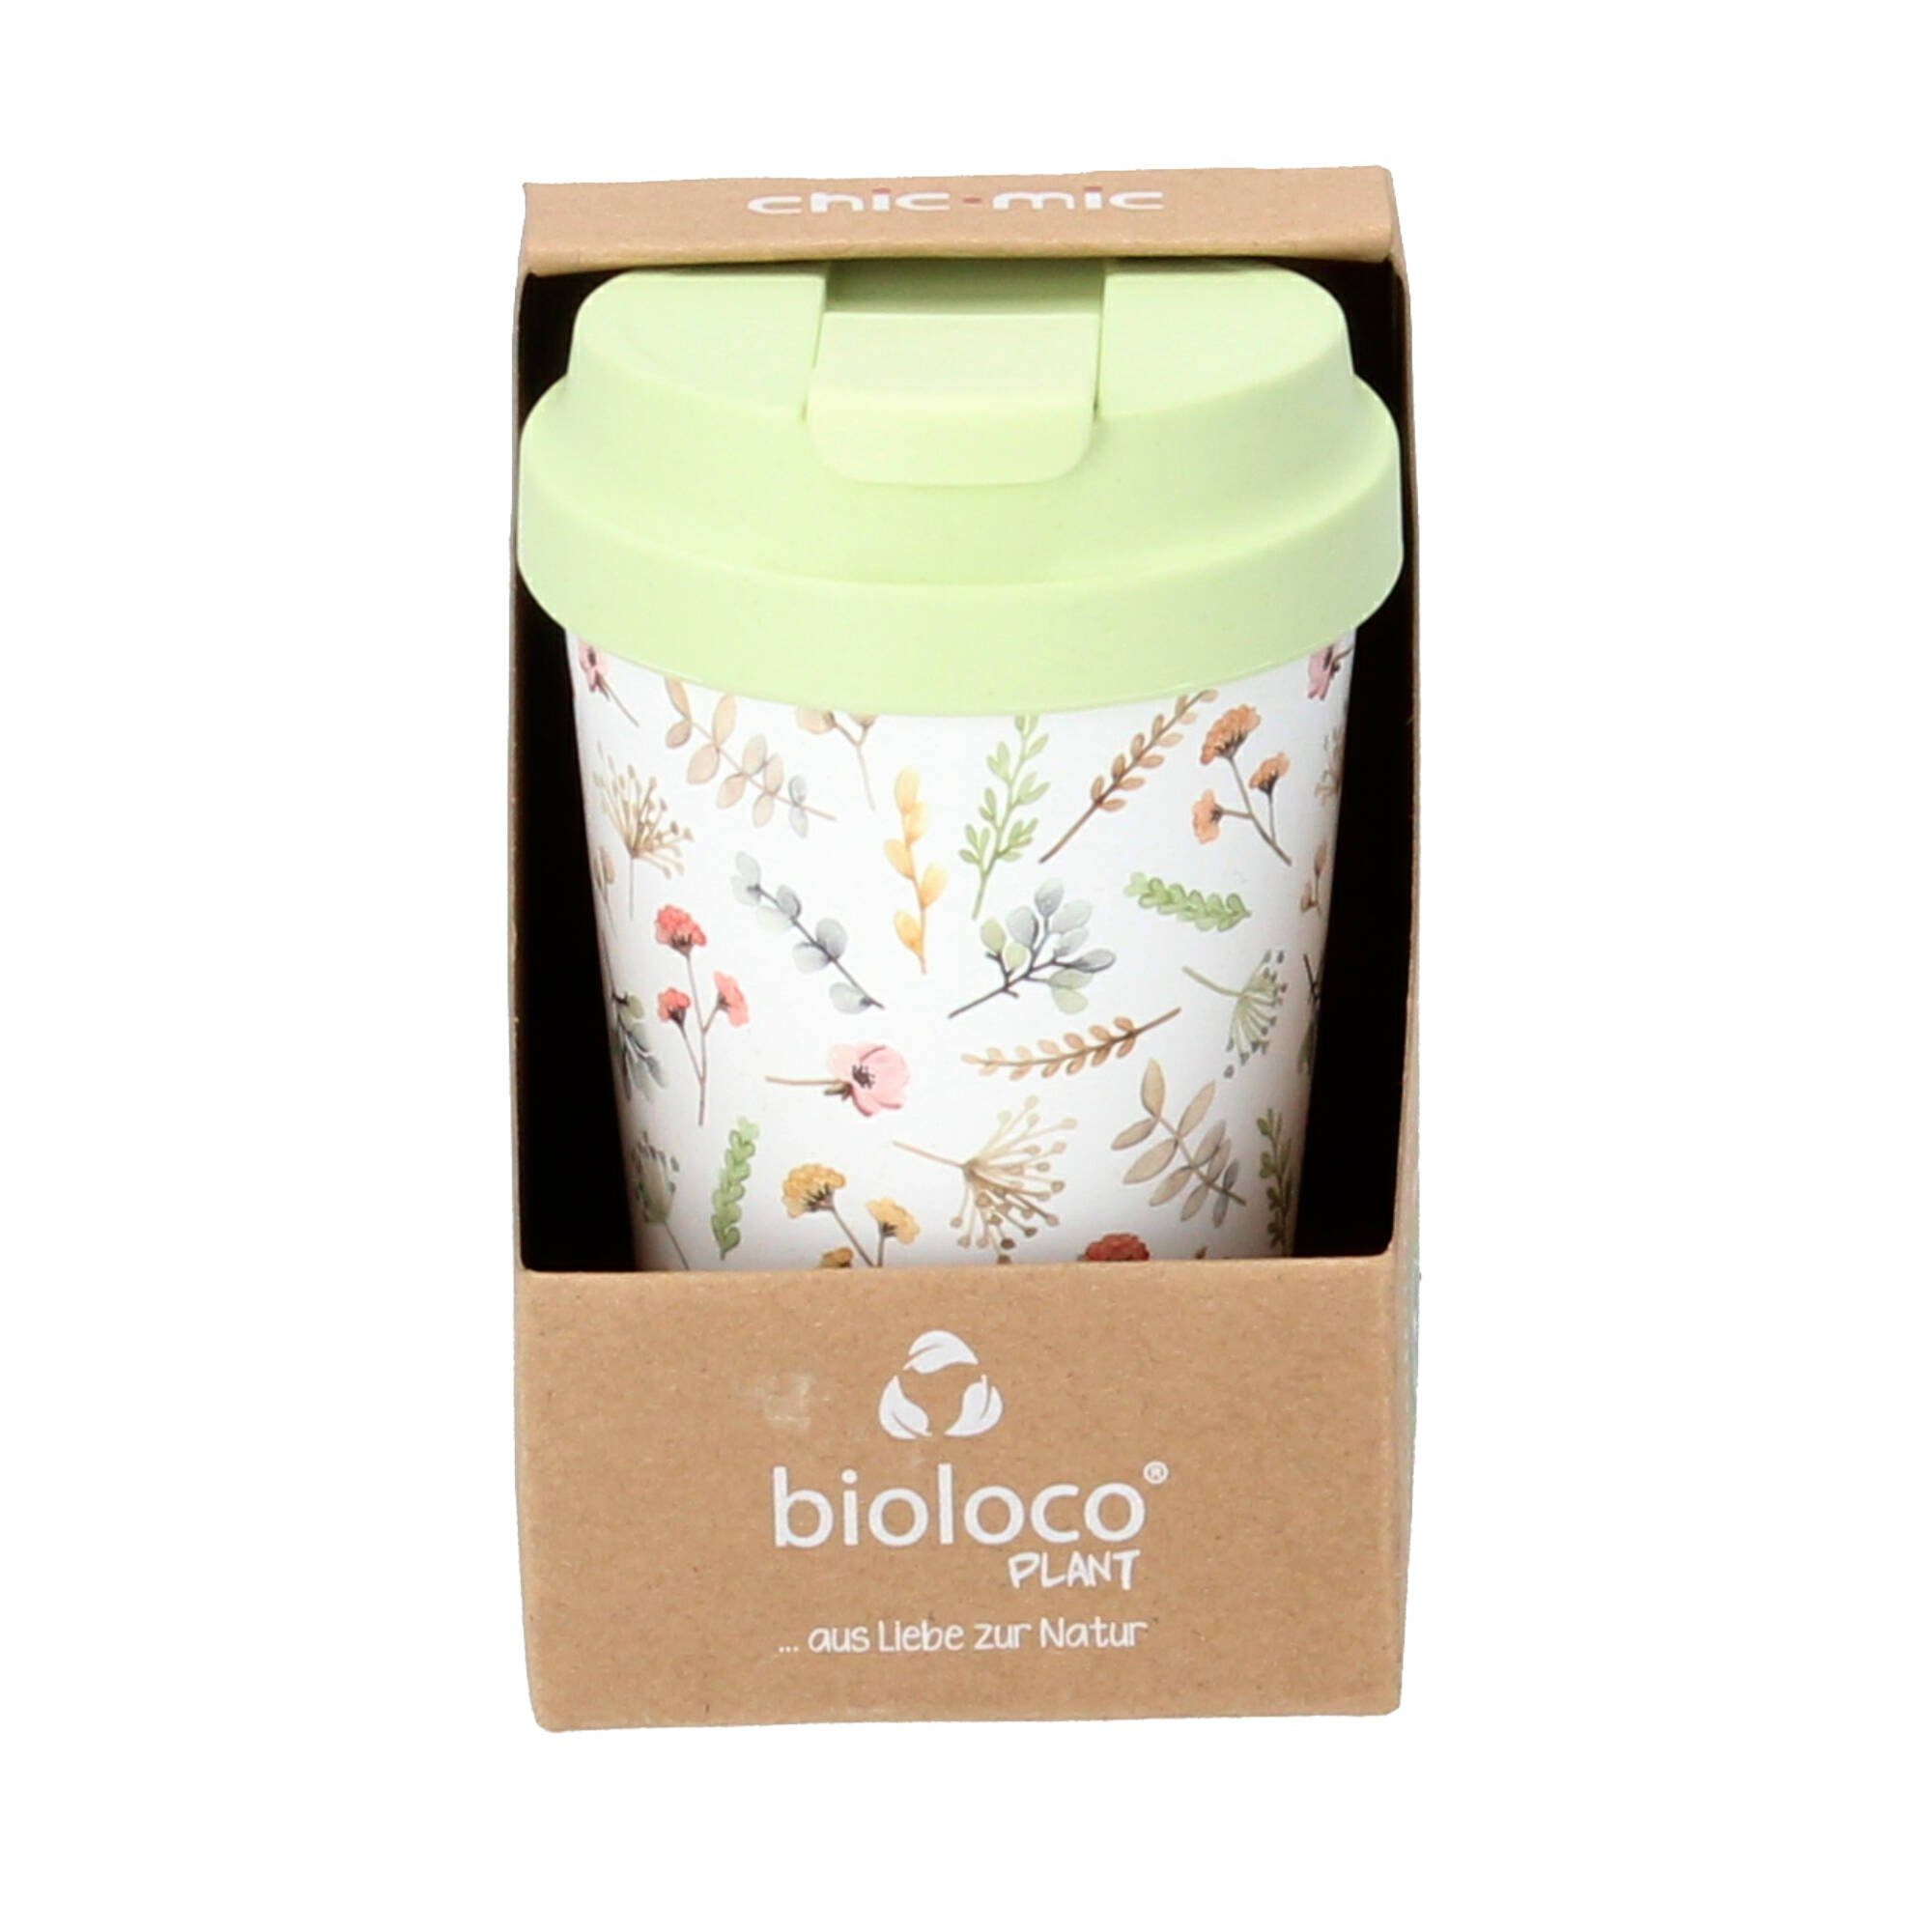 bioloco plant Becher GmbH cup (Kunststoff Pflanzenzucker) watercolor chic easy flowers, mic PLA aus